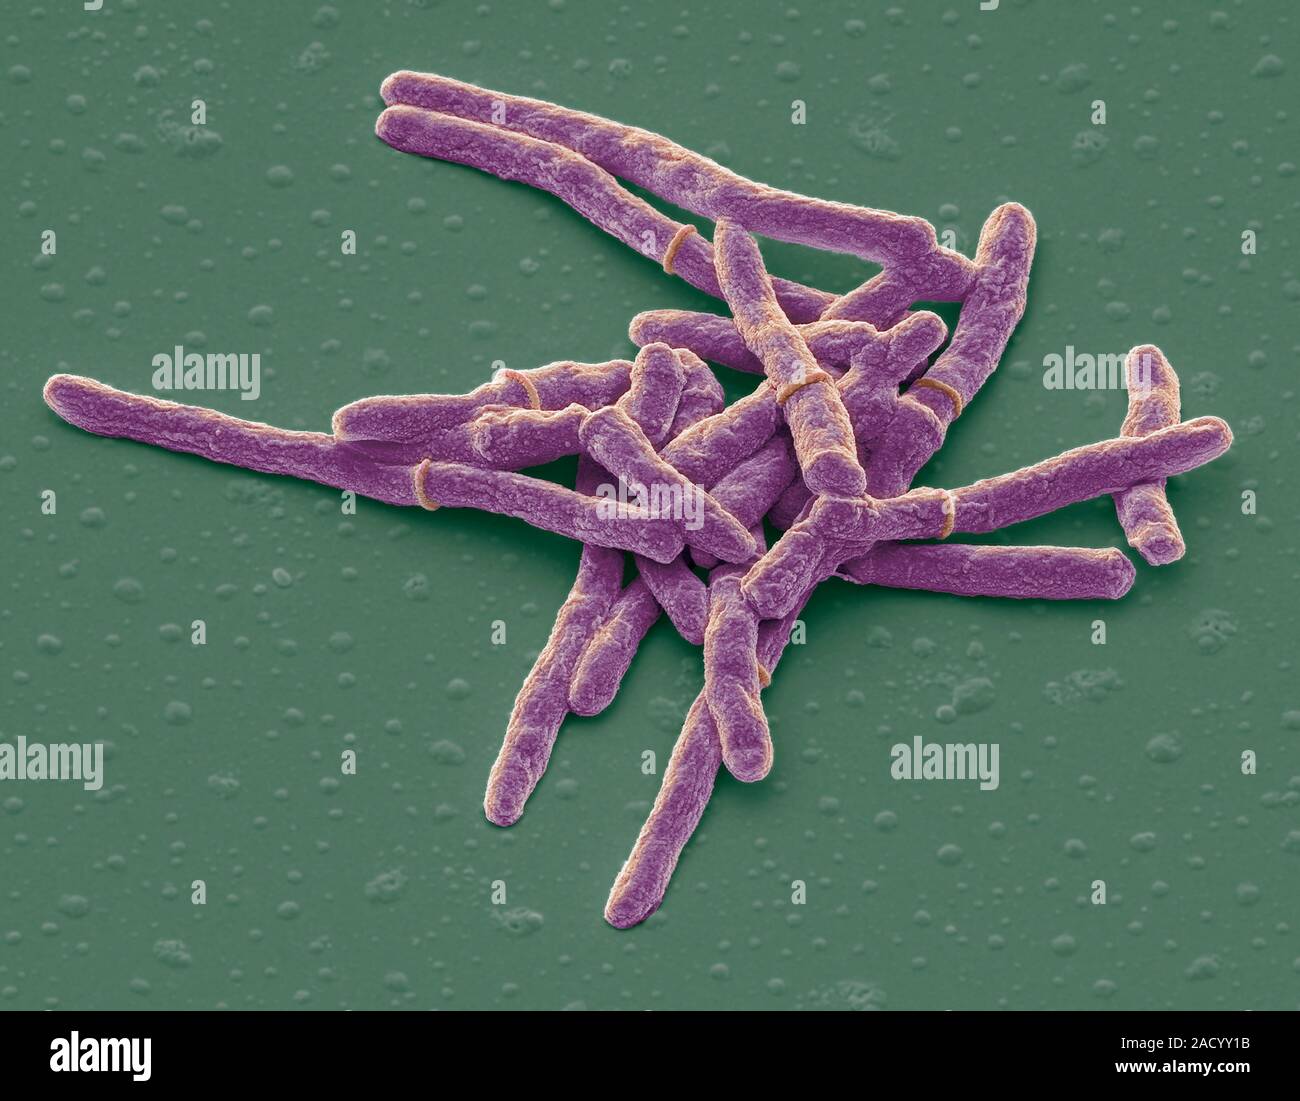 mycobacterium smegmatis